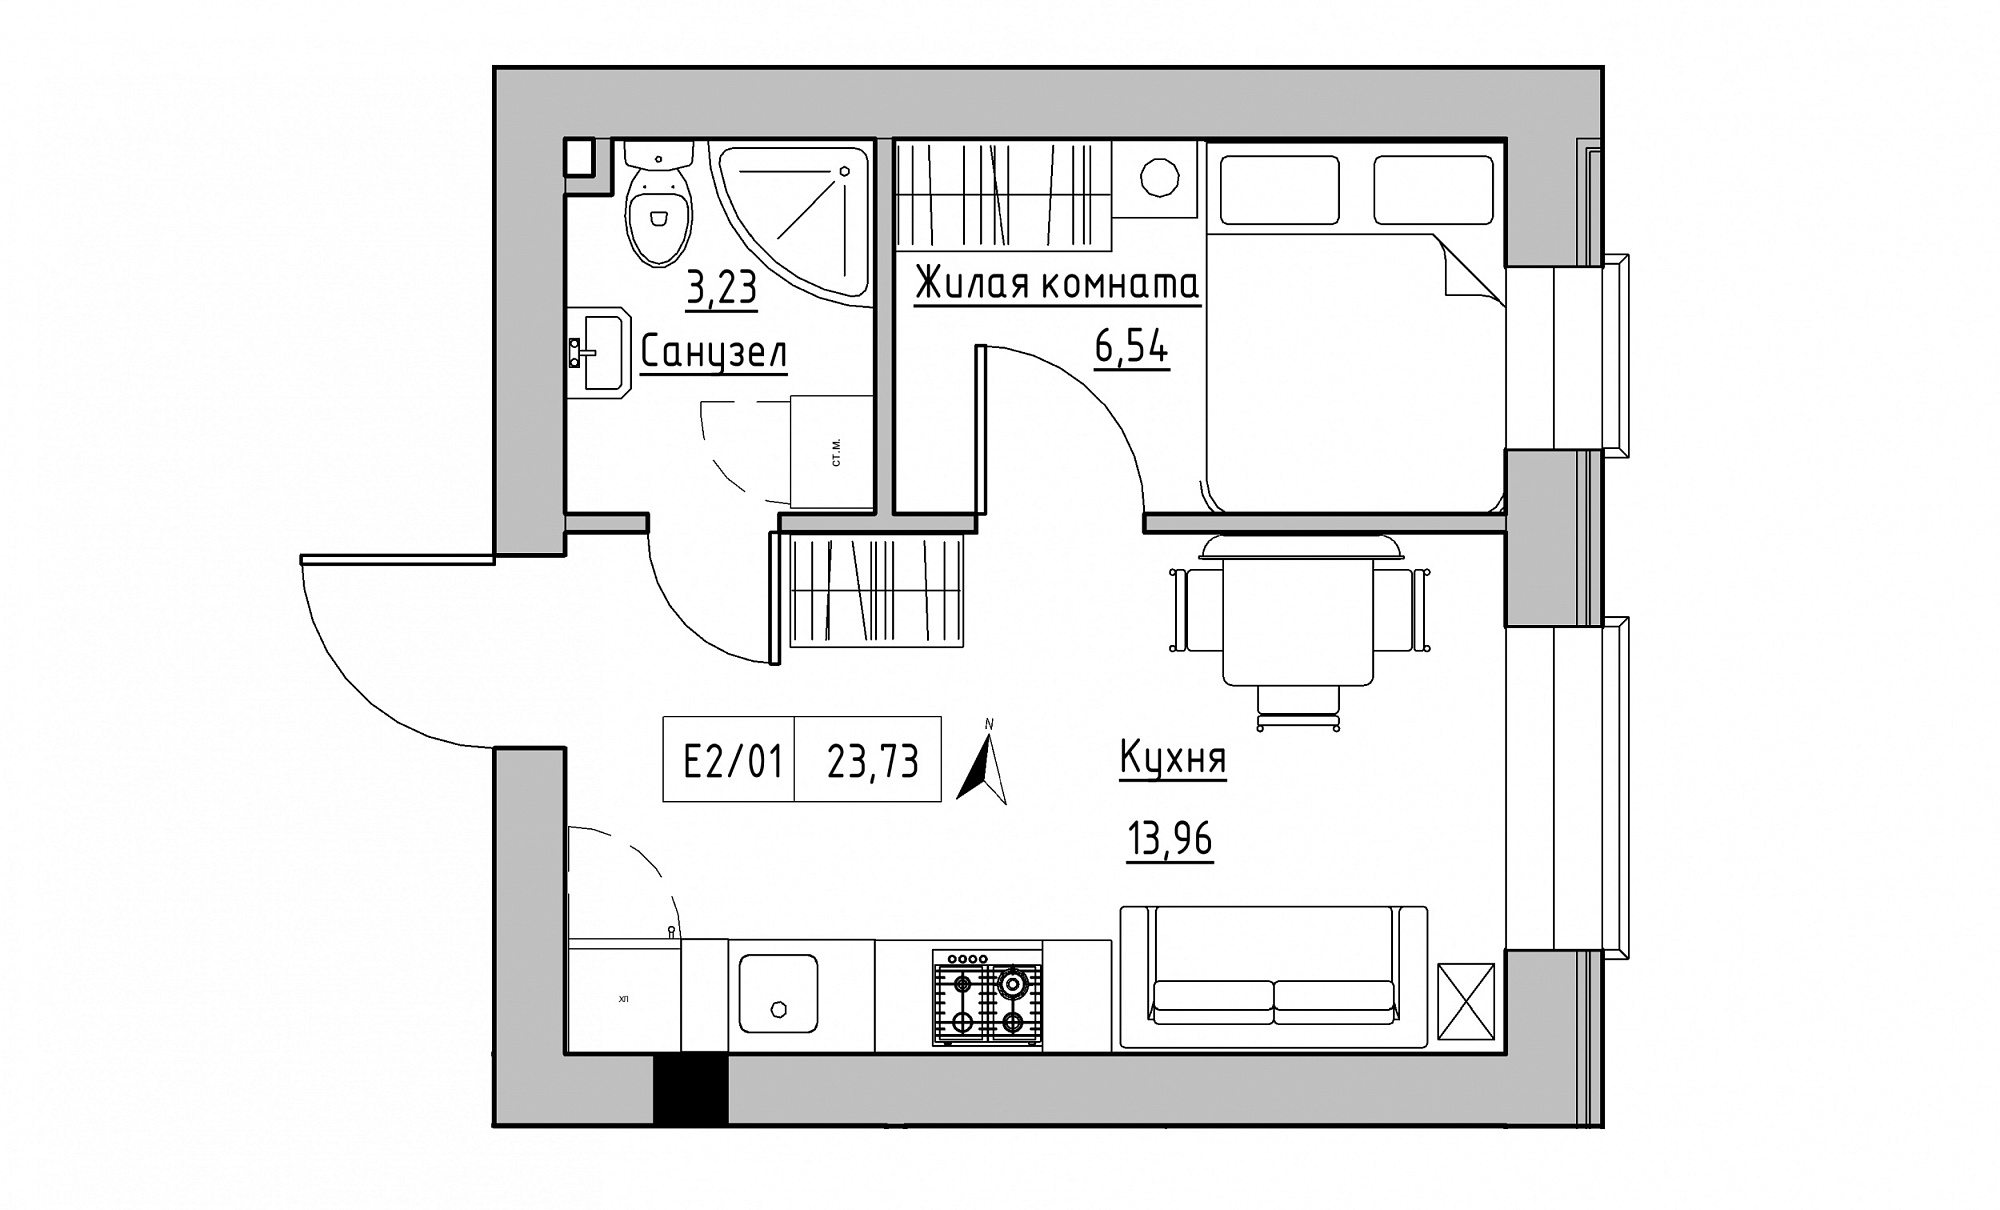 Planning 1-rm flats area 23.73m2, KS-015-01/0007.